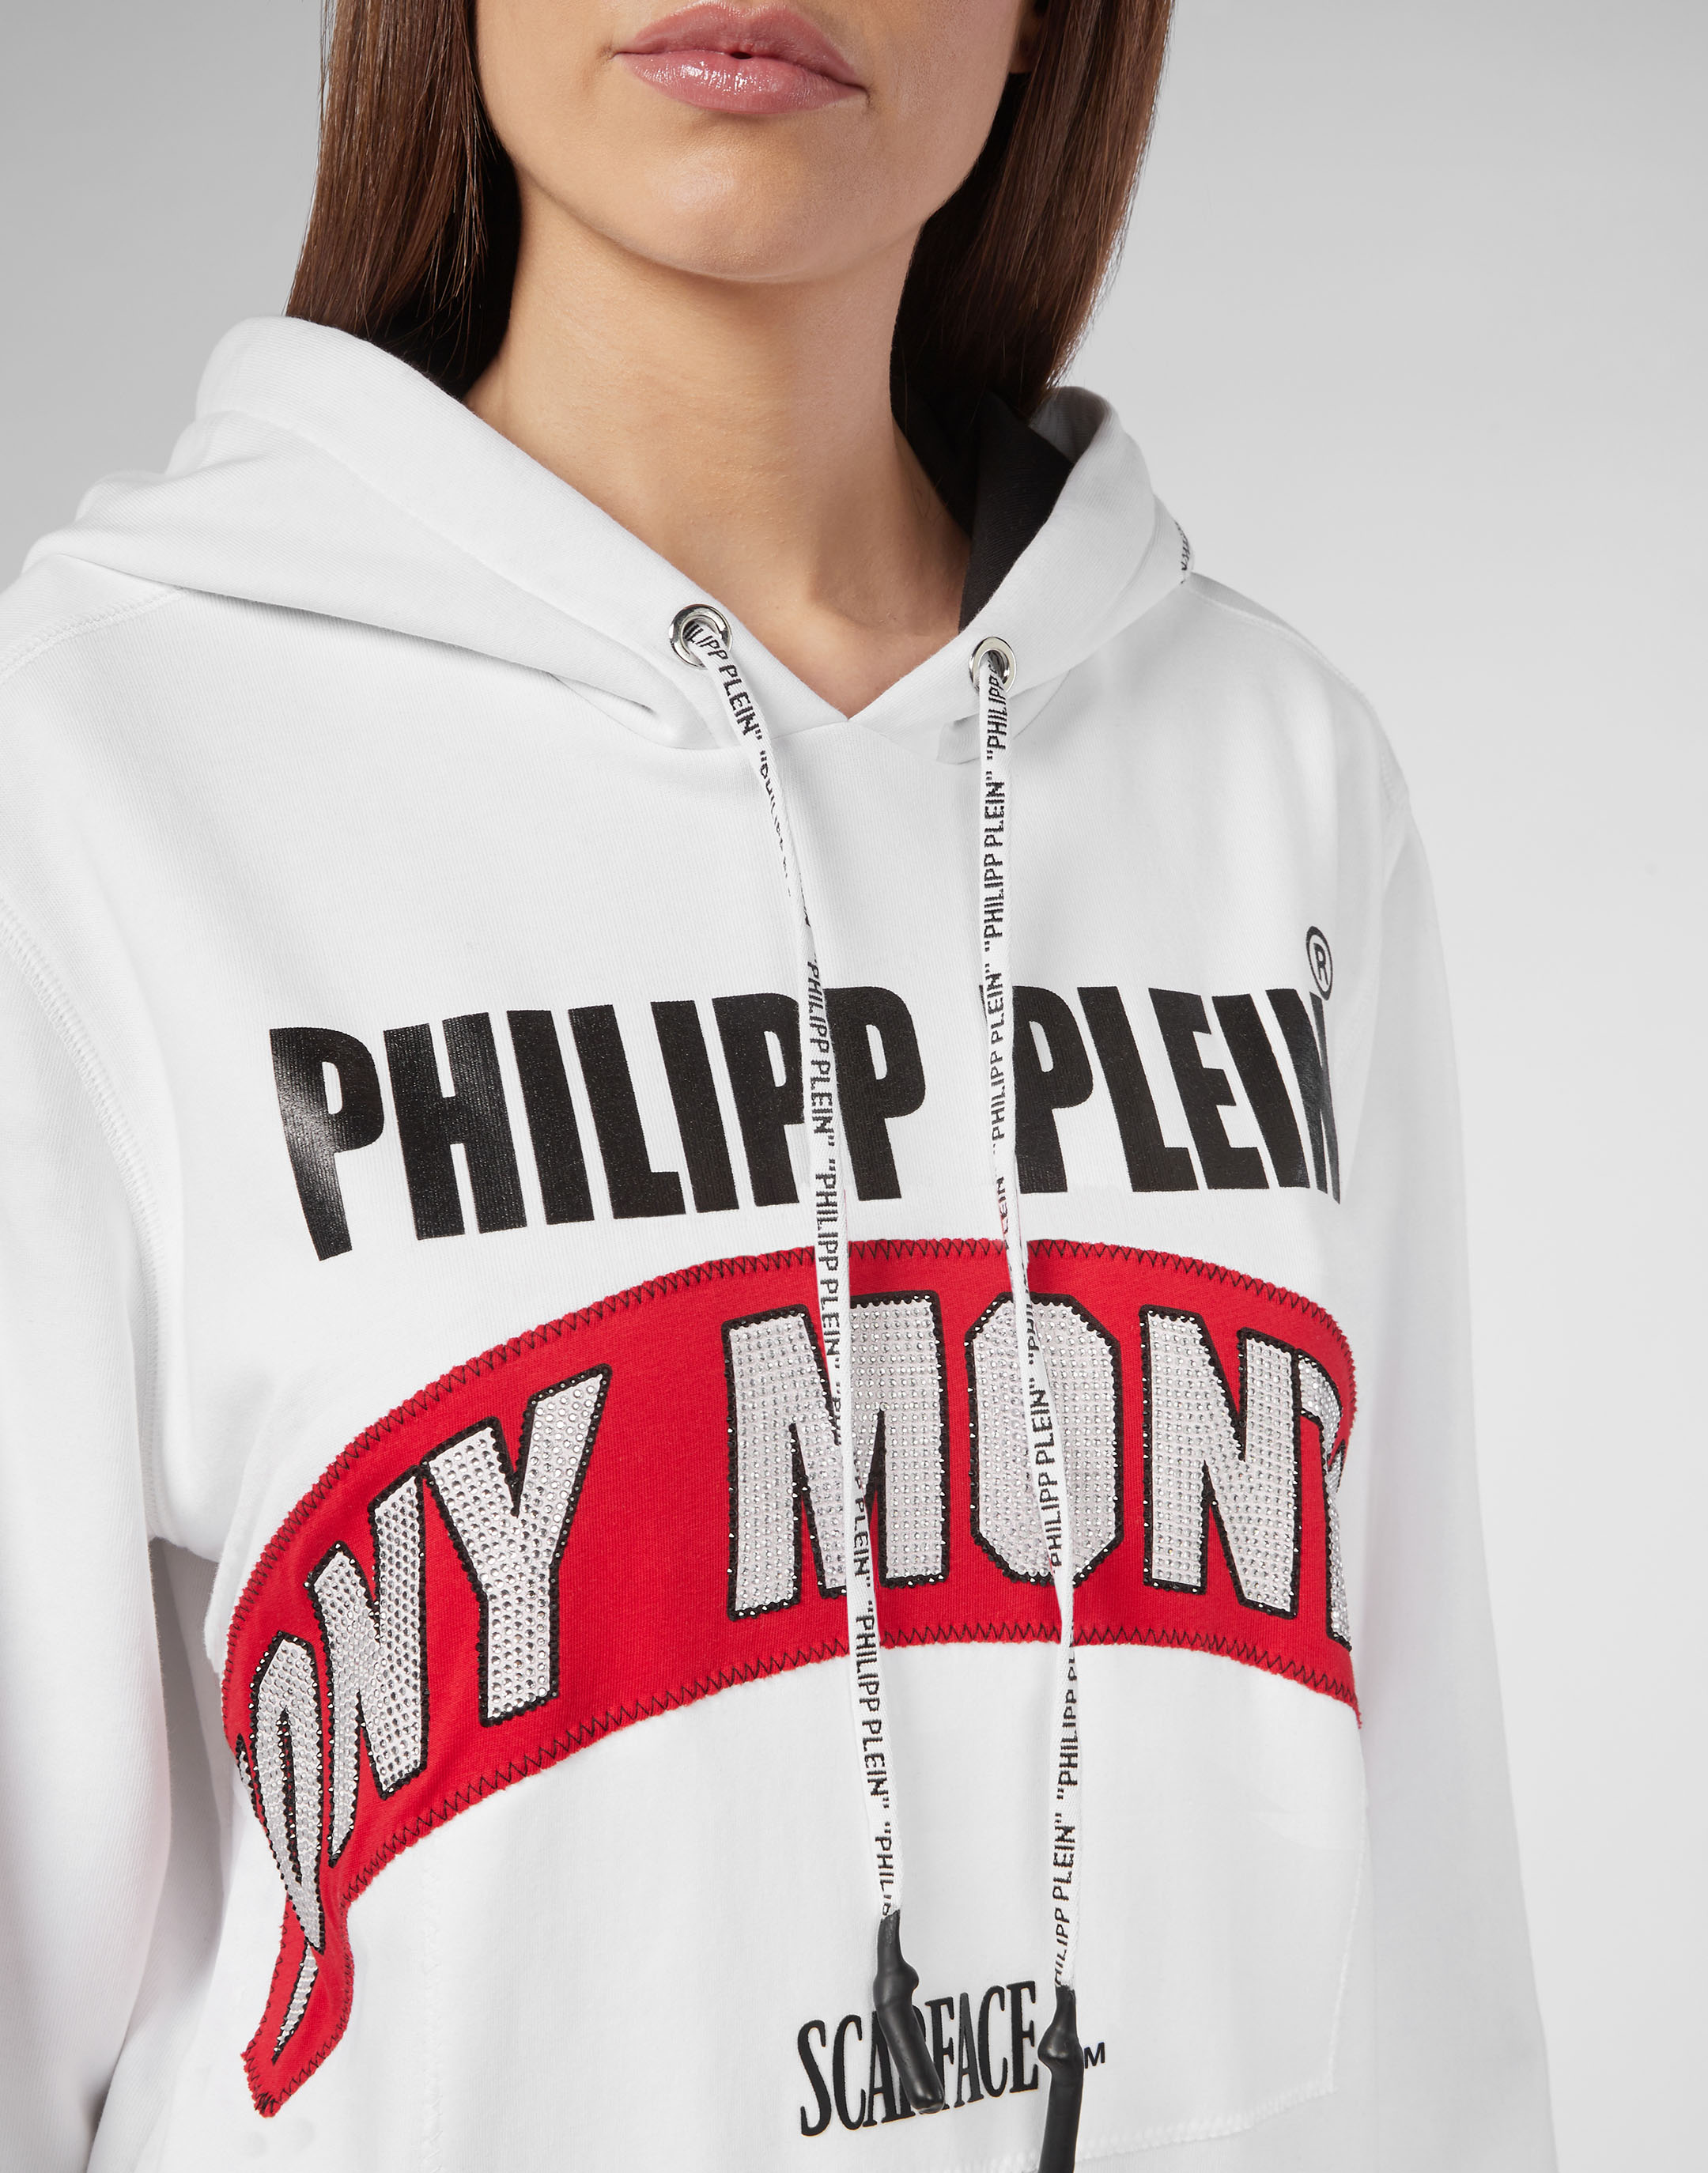 philipp plein tony montana hoodie